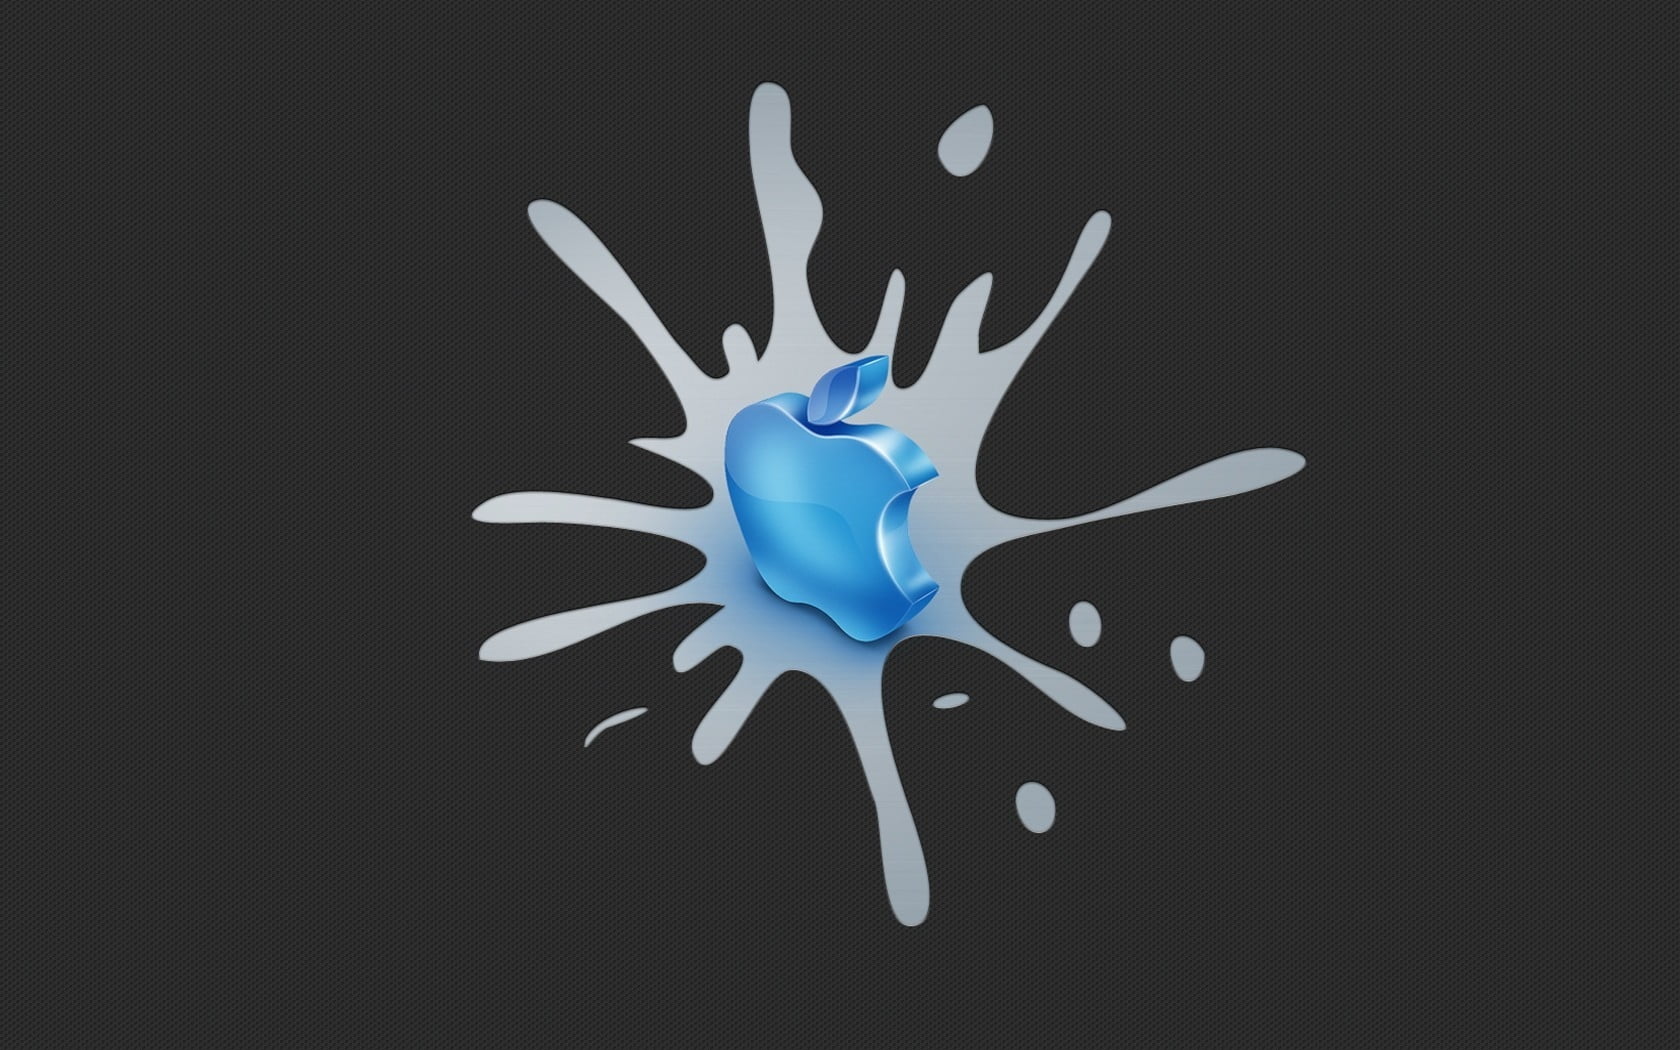 blue Apple logo